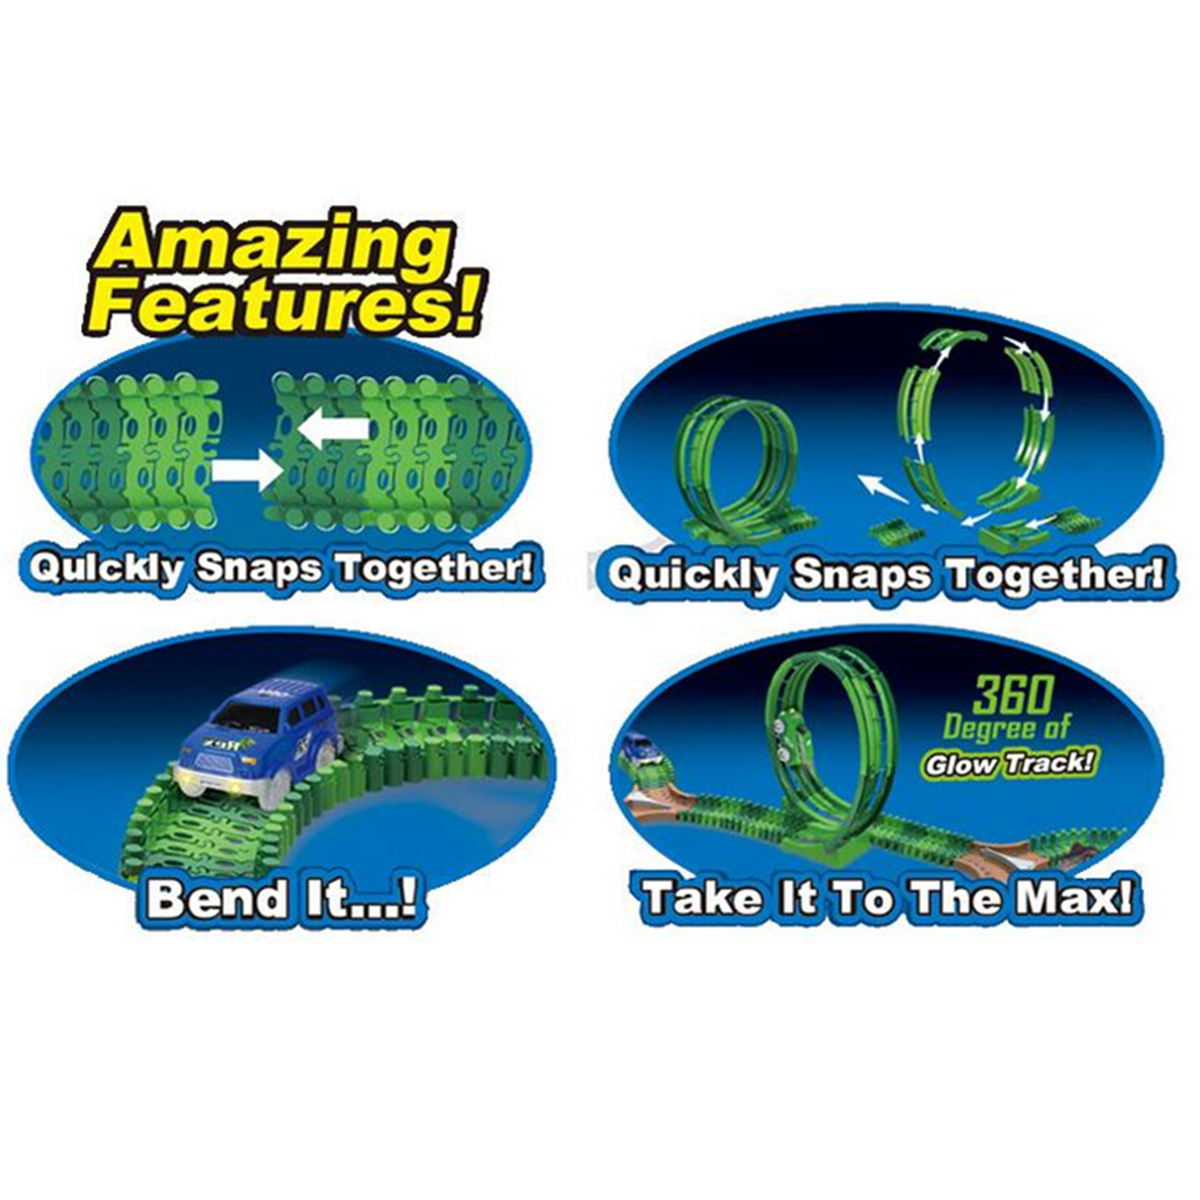 Dinosaur-Slot-Car-Race-Track-Toys-Kids-Bridge-Battery-Toy-Park-Roller-Coaster-1414455